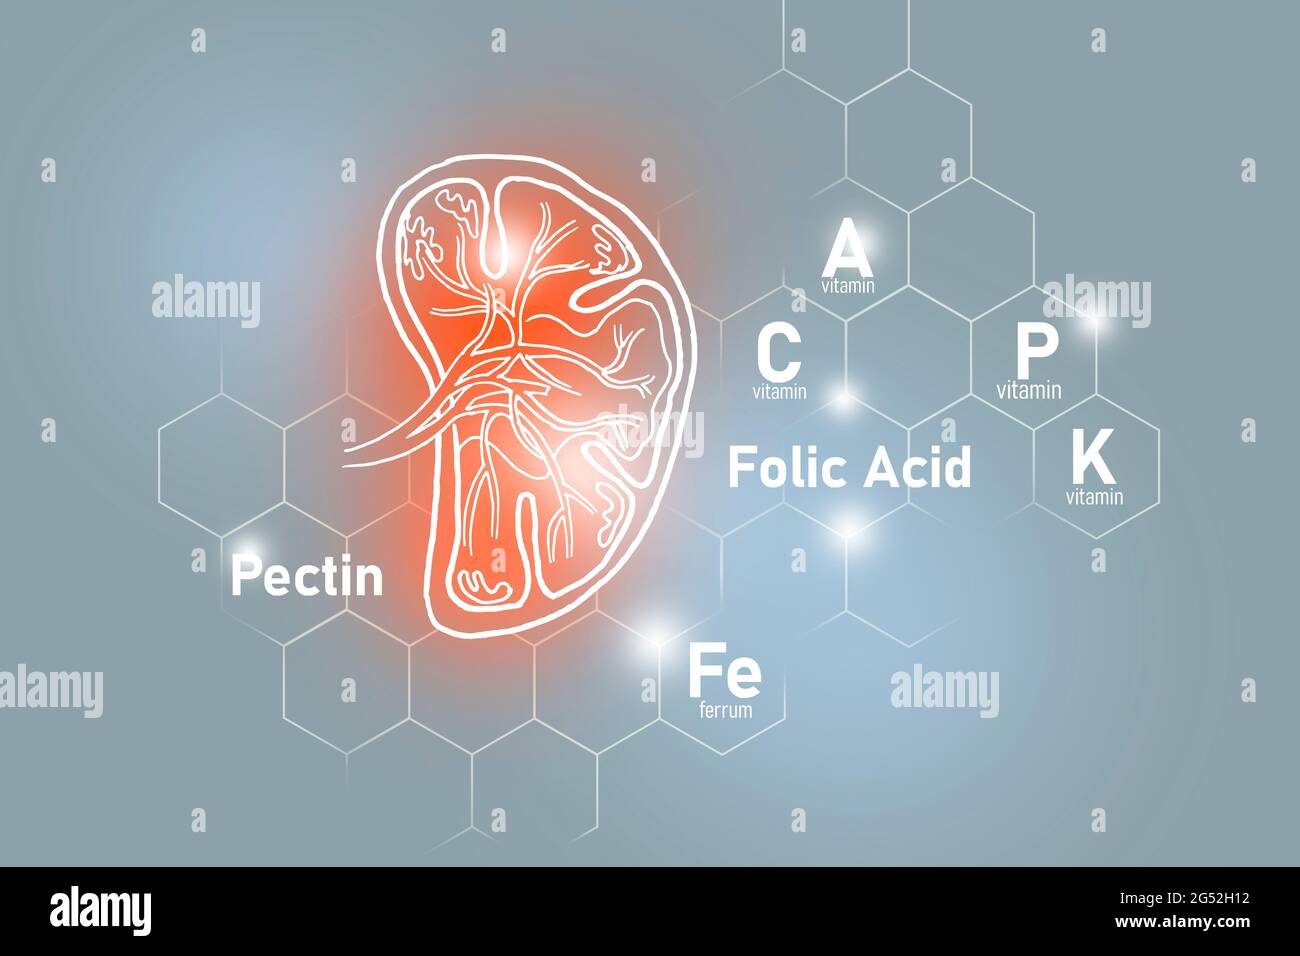 Essential nutrients for Spleen health including Pectin, Folic Acid, Vitamin P, Ferrum.Design set of main human organs on light grey background. Stock Photo